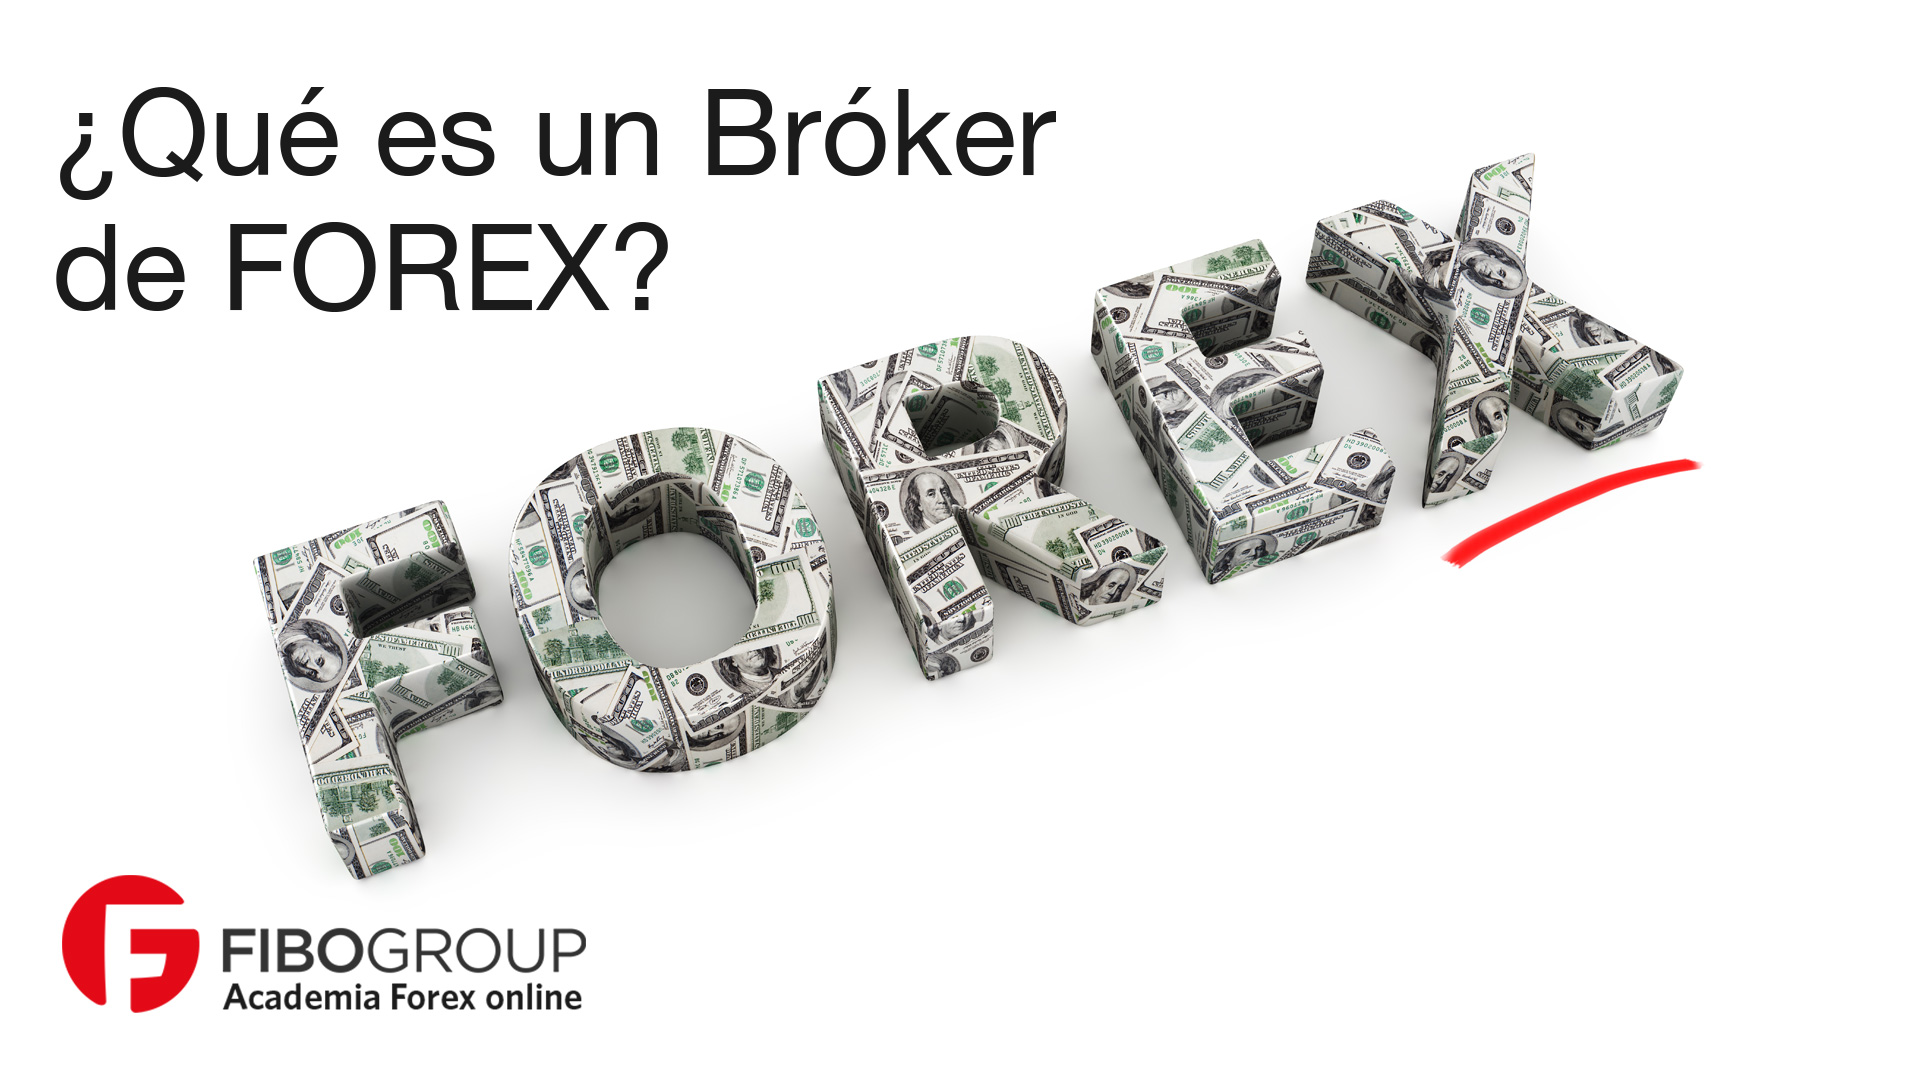 ¿Qué es un Bróker de FOREX?